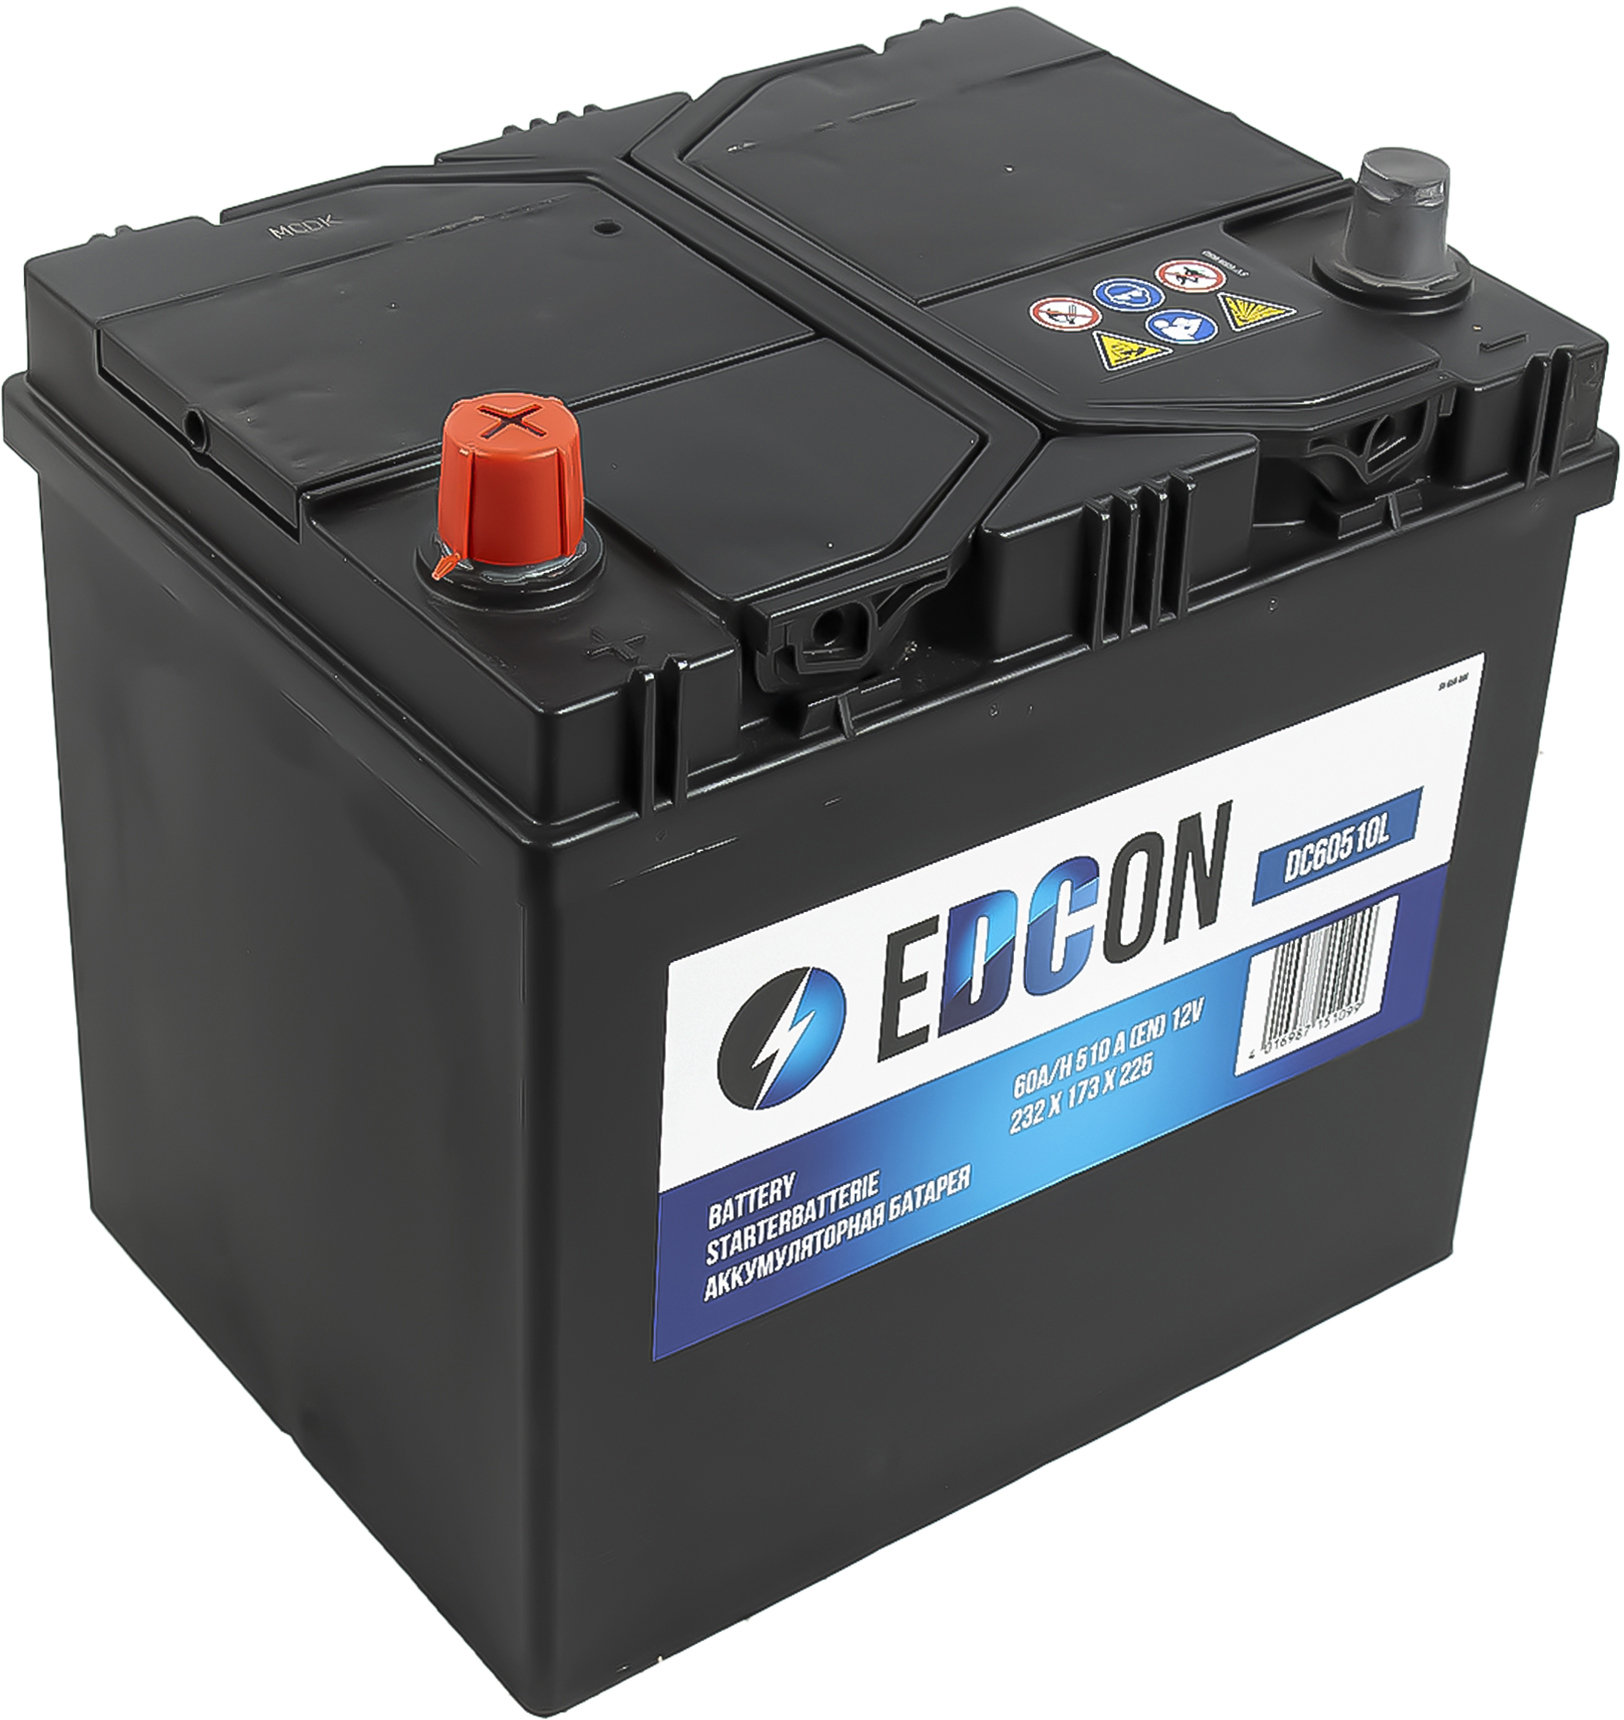   Армтек Аккумулятор EDCON DC60510L 60 Ач 510 А 232x173x225 мм 1 (+-) прямая